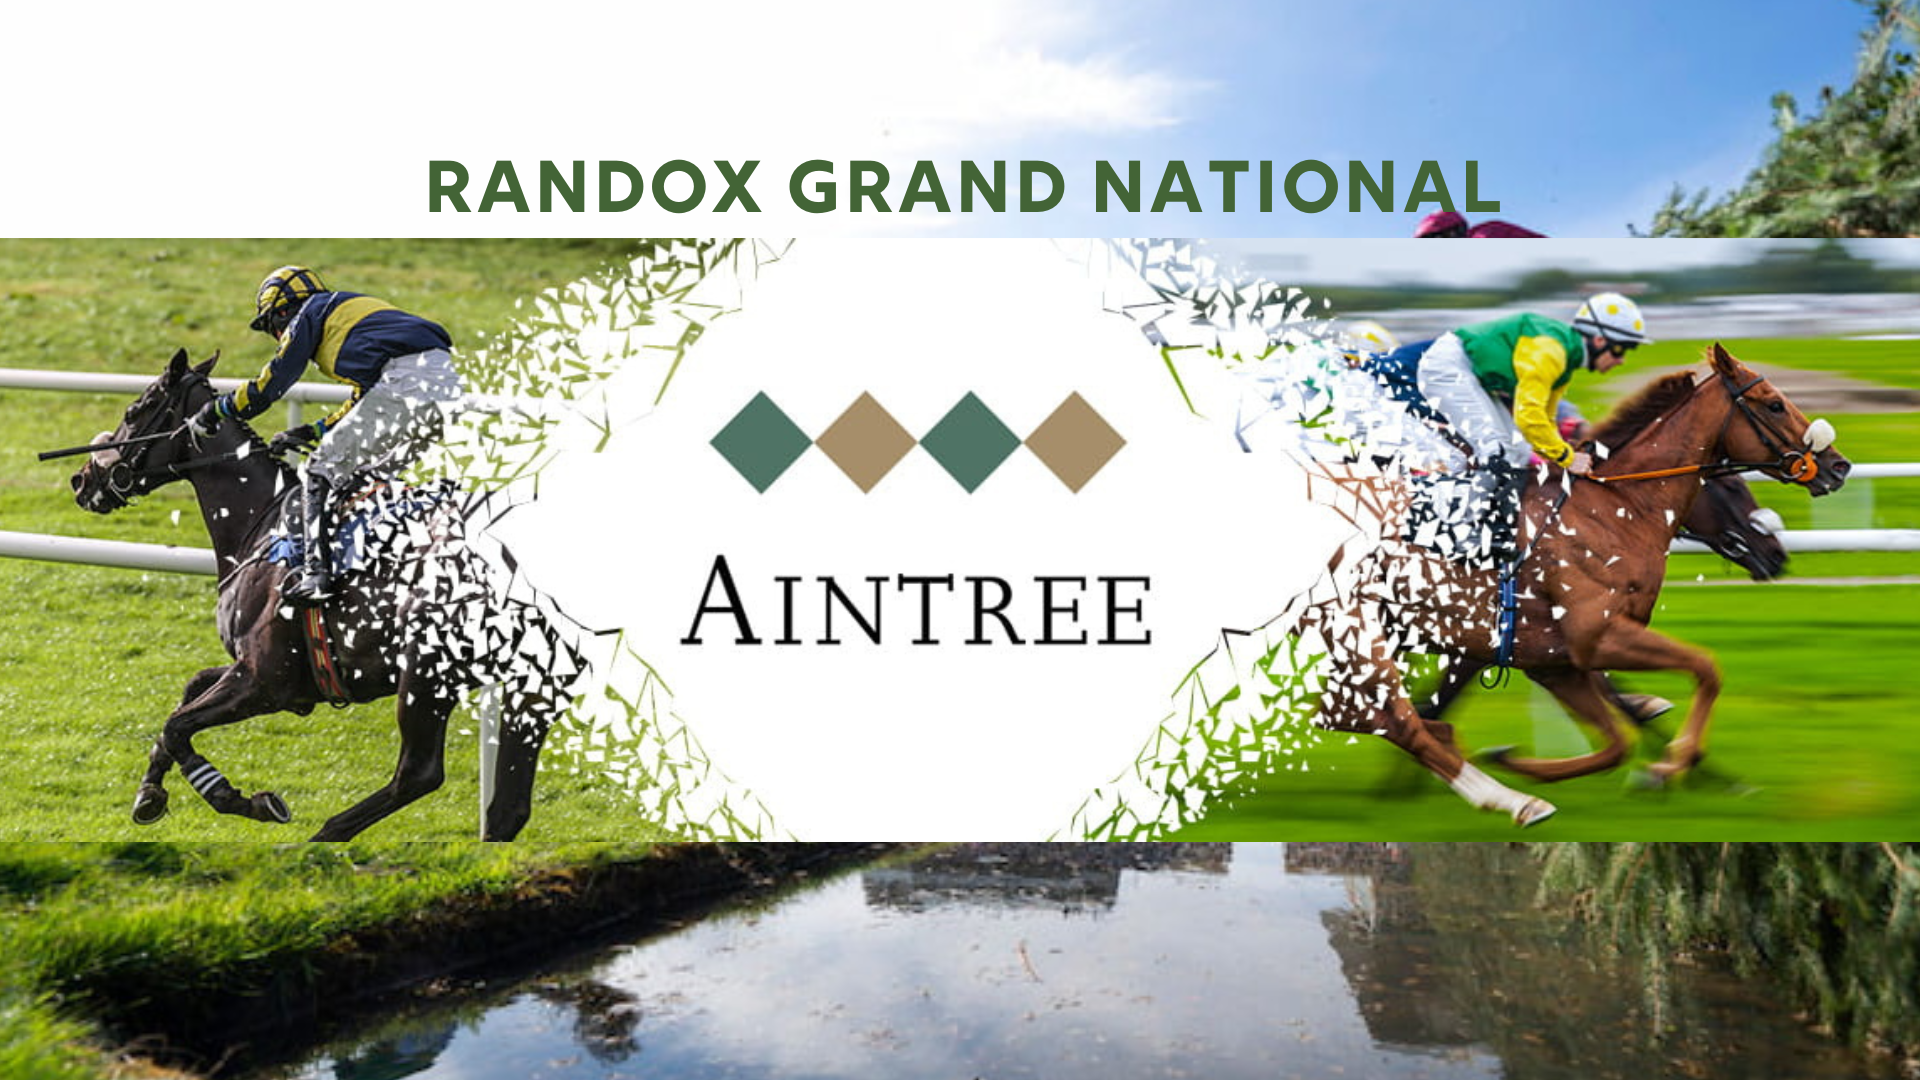 The Randox Grand National